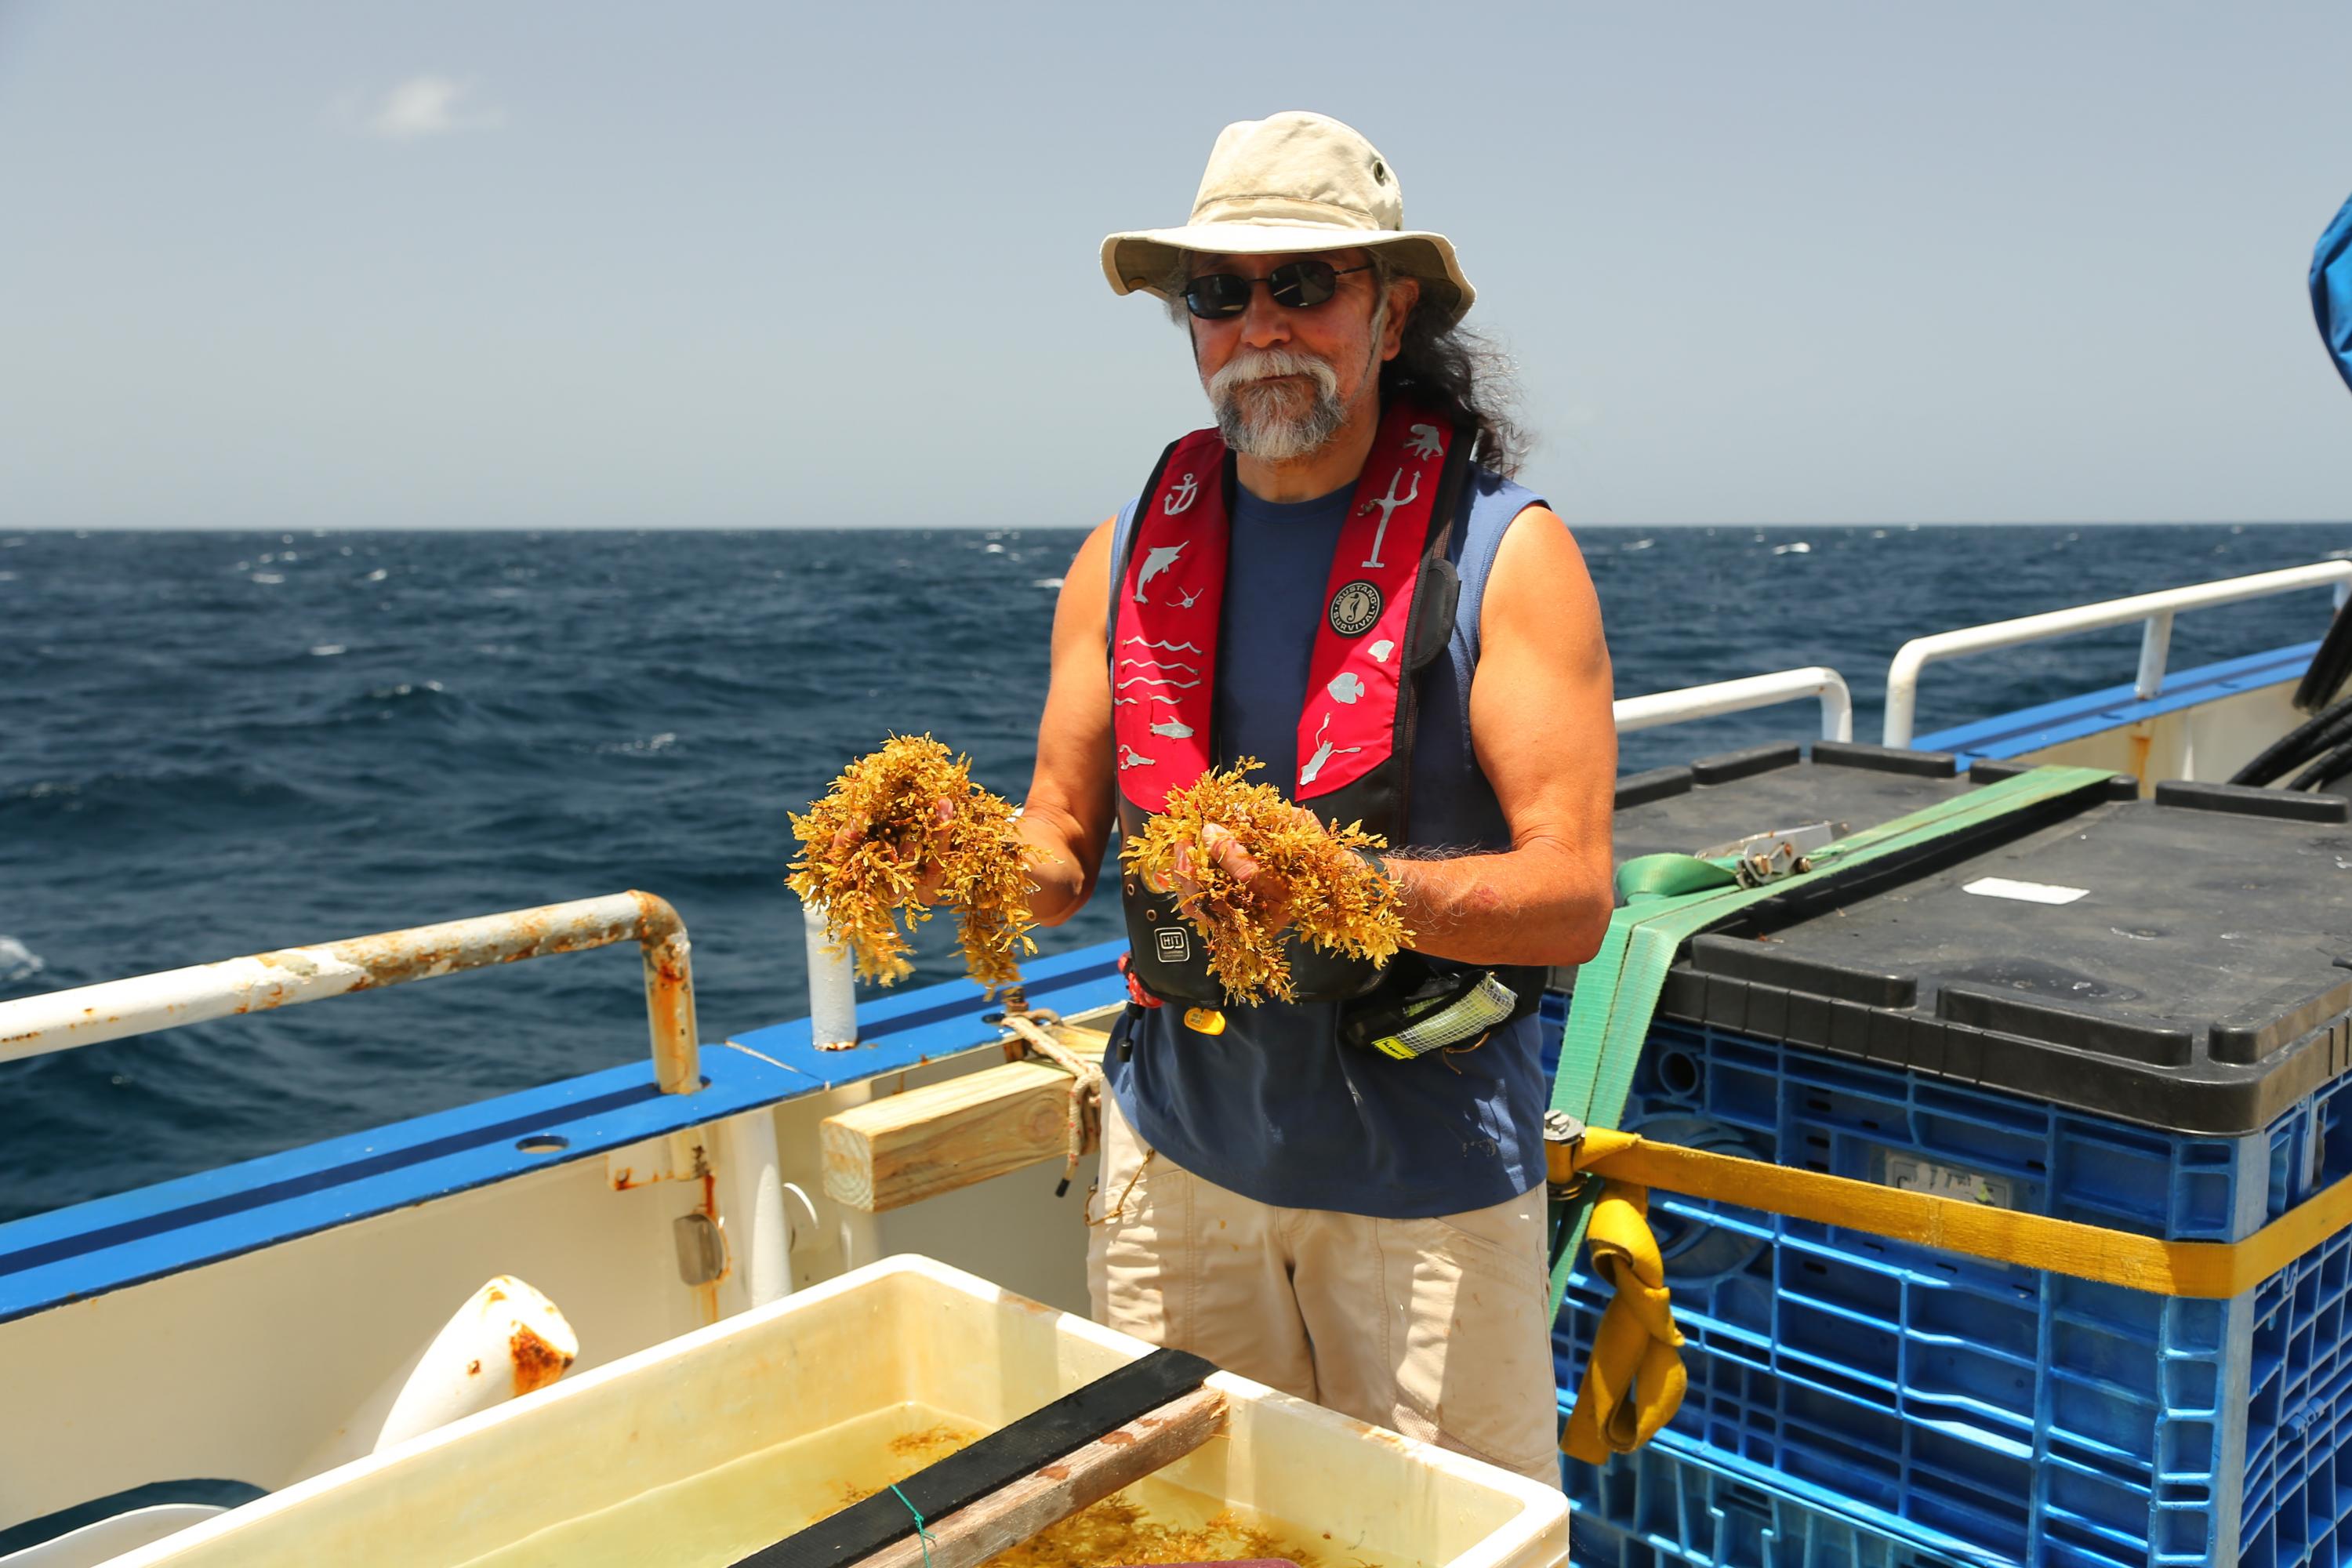 Joseph Montoya collecting Sargassum about 80 nautical miles off the coast of Barbados. (Credit: Lyra Montoya, University of Colorado)